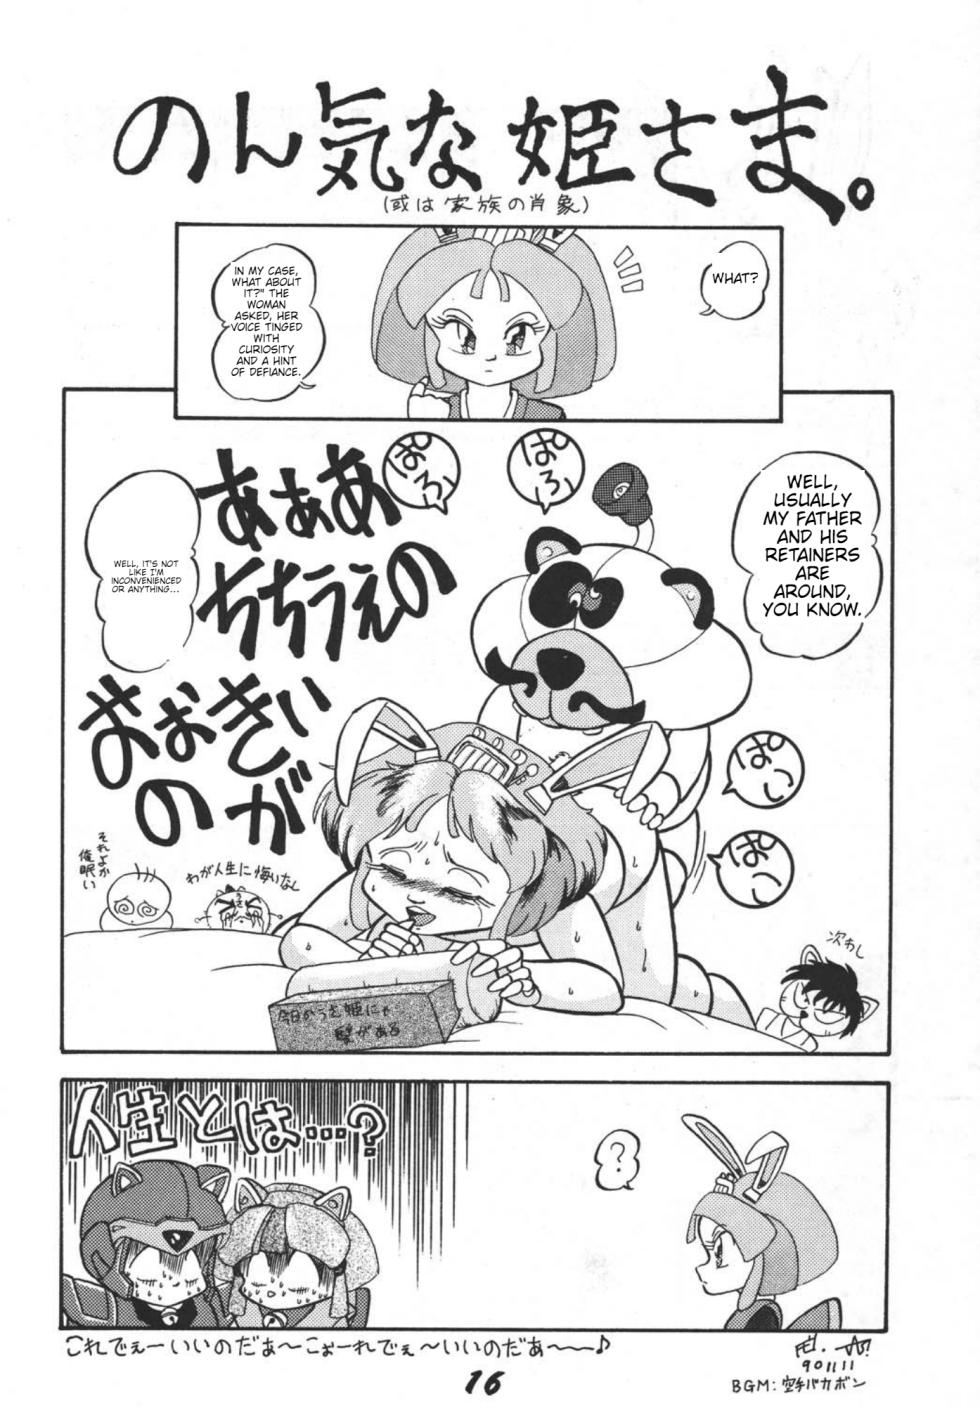 [RPG Company 2] Prepare well (kyatto ninden teyandee) (English) (Ichigo Manga Translator Translation) - Page 18